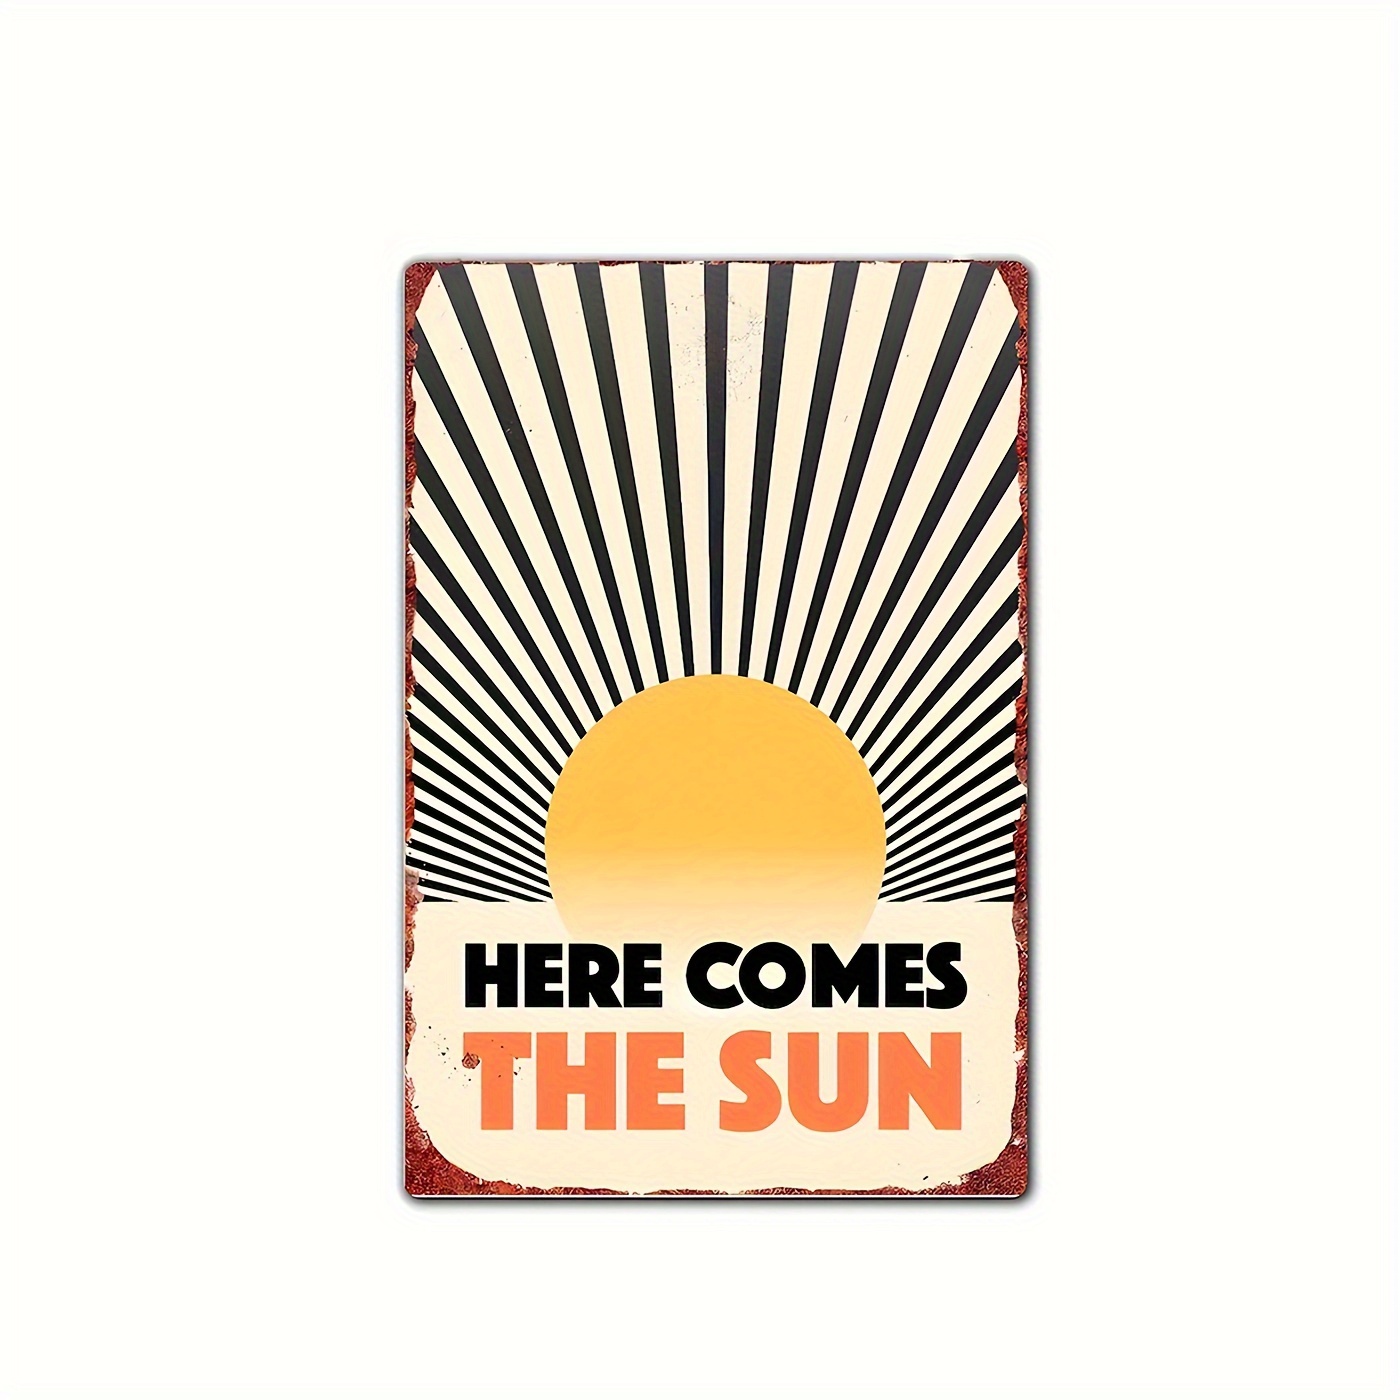 

Here Comes The Sun Metal Wall Plaque - Tin Metal Sign - 8x12 Inch - Beatles Inspired Lyrics, Tin Wall Decor - Indoor/outdoor